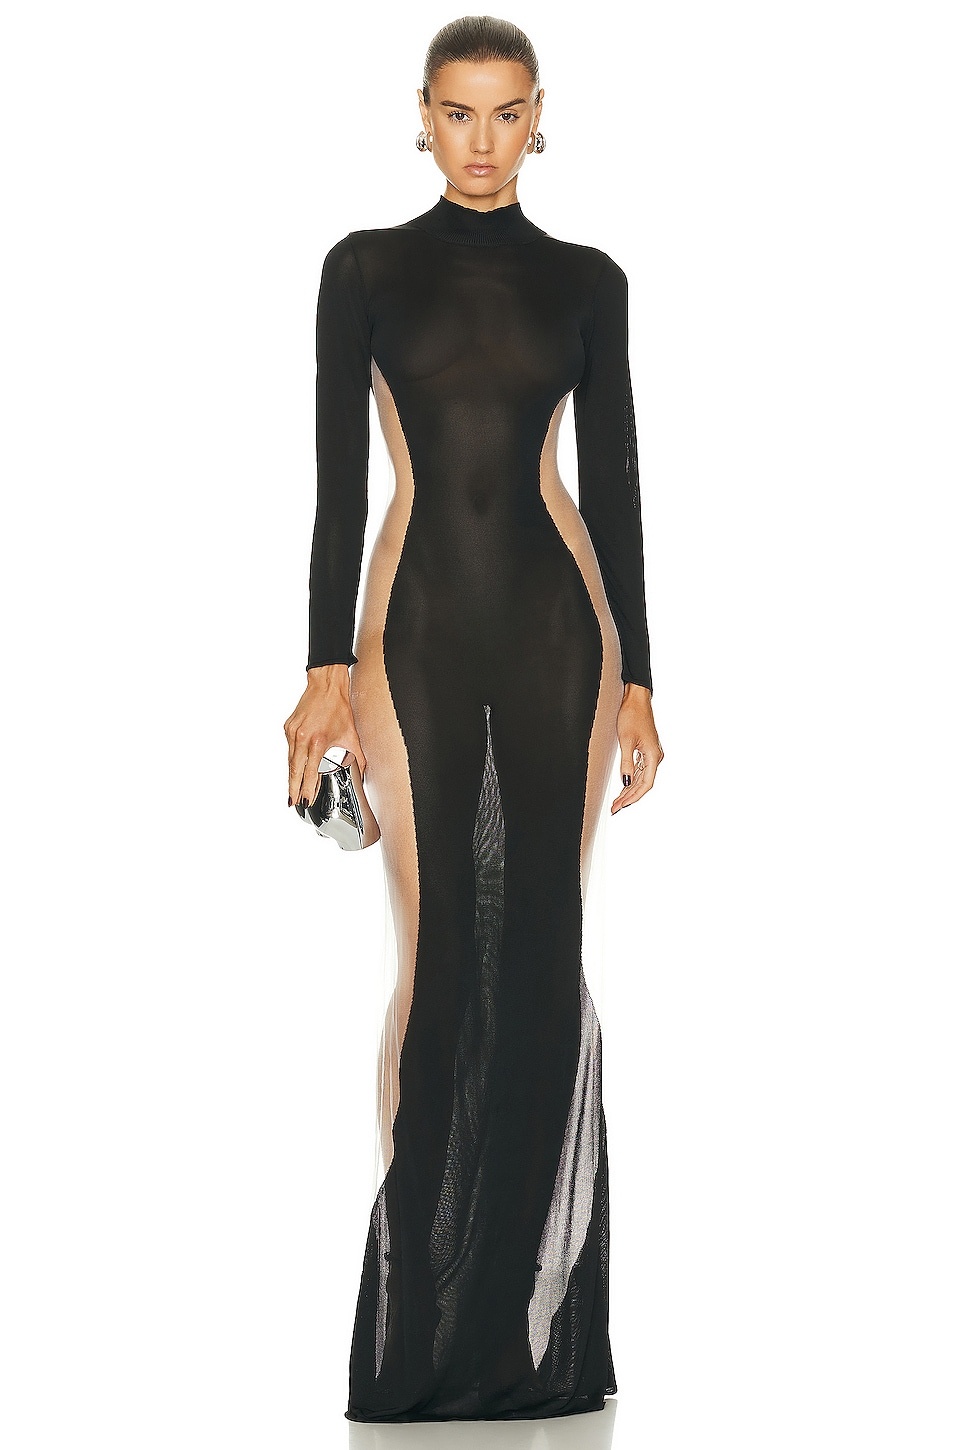 Silhouette Maxi Dress - 2